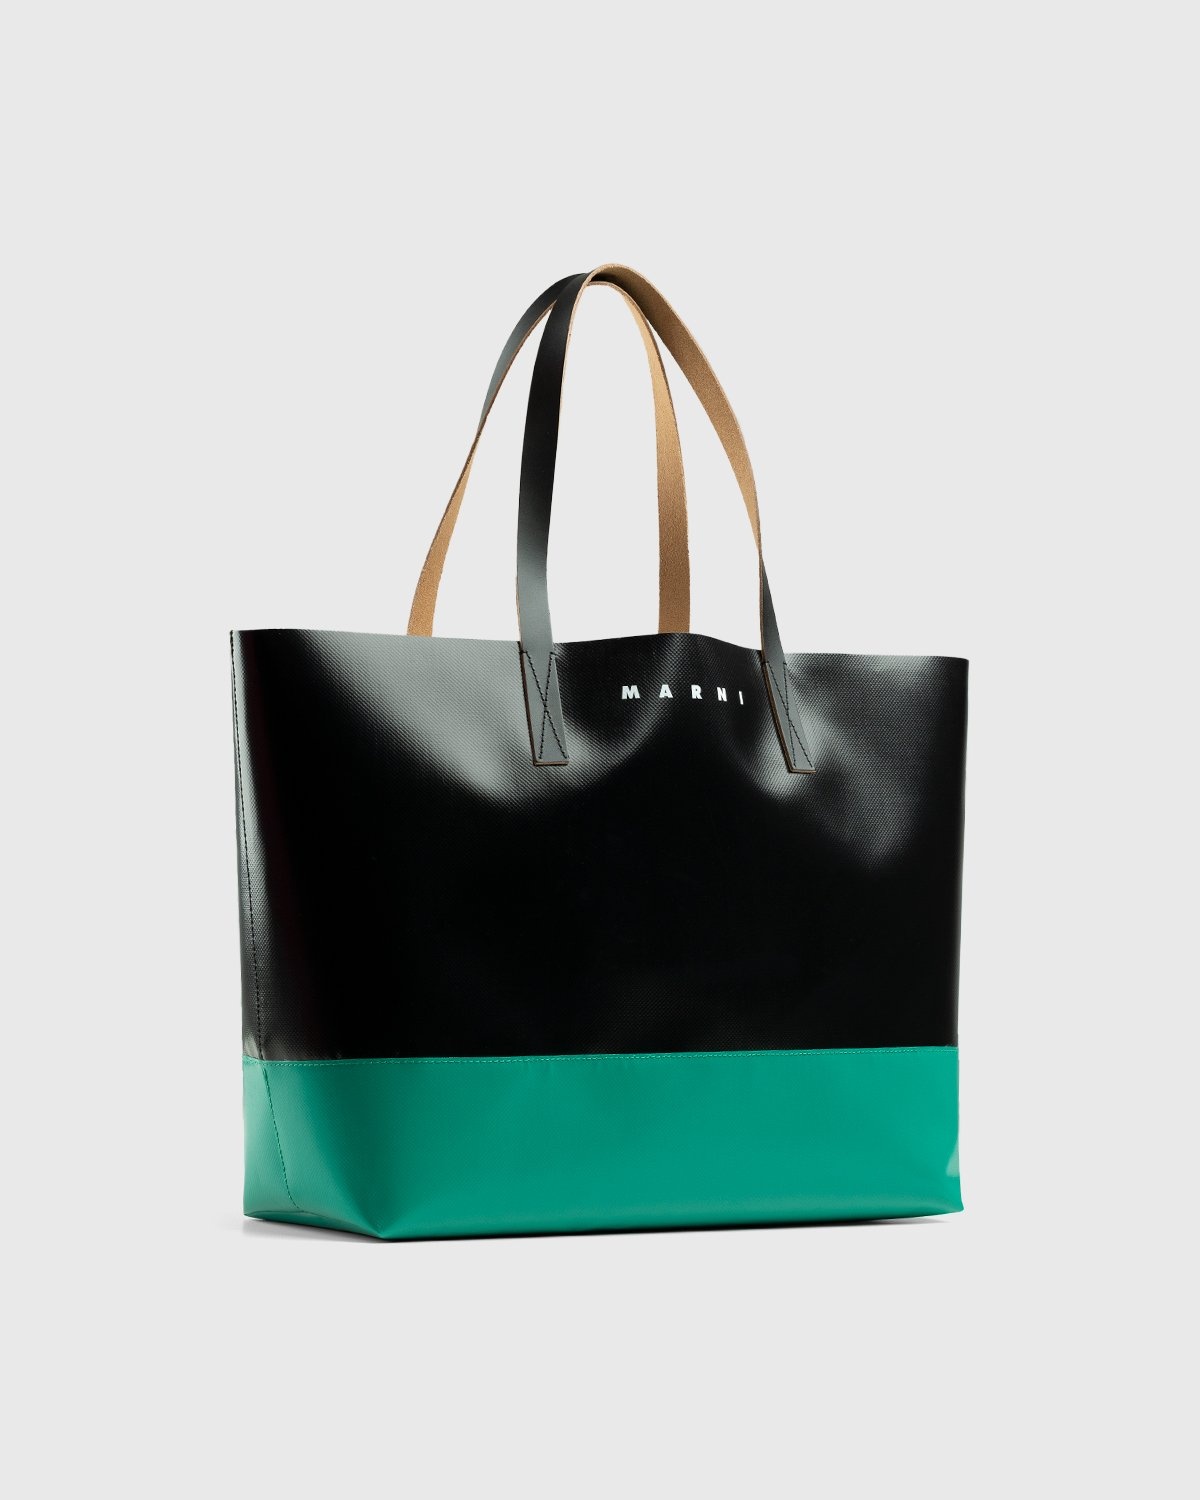 Marni – Tribeca Two-Tone Tote Bag Black/Green - Bags - Black - Image 3